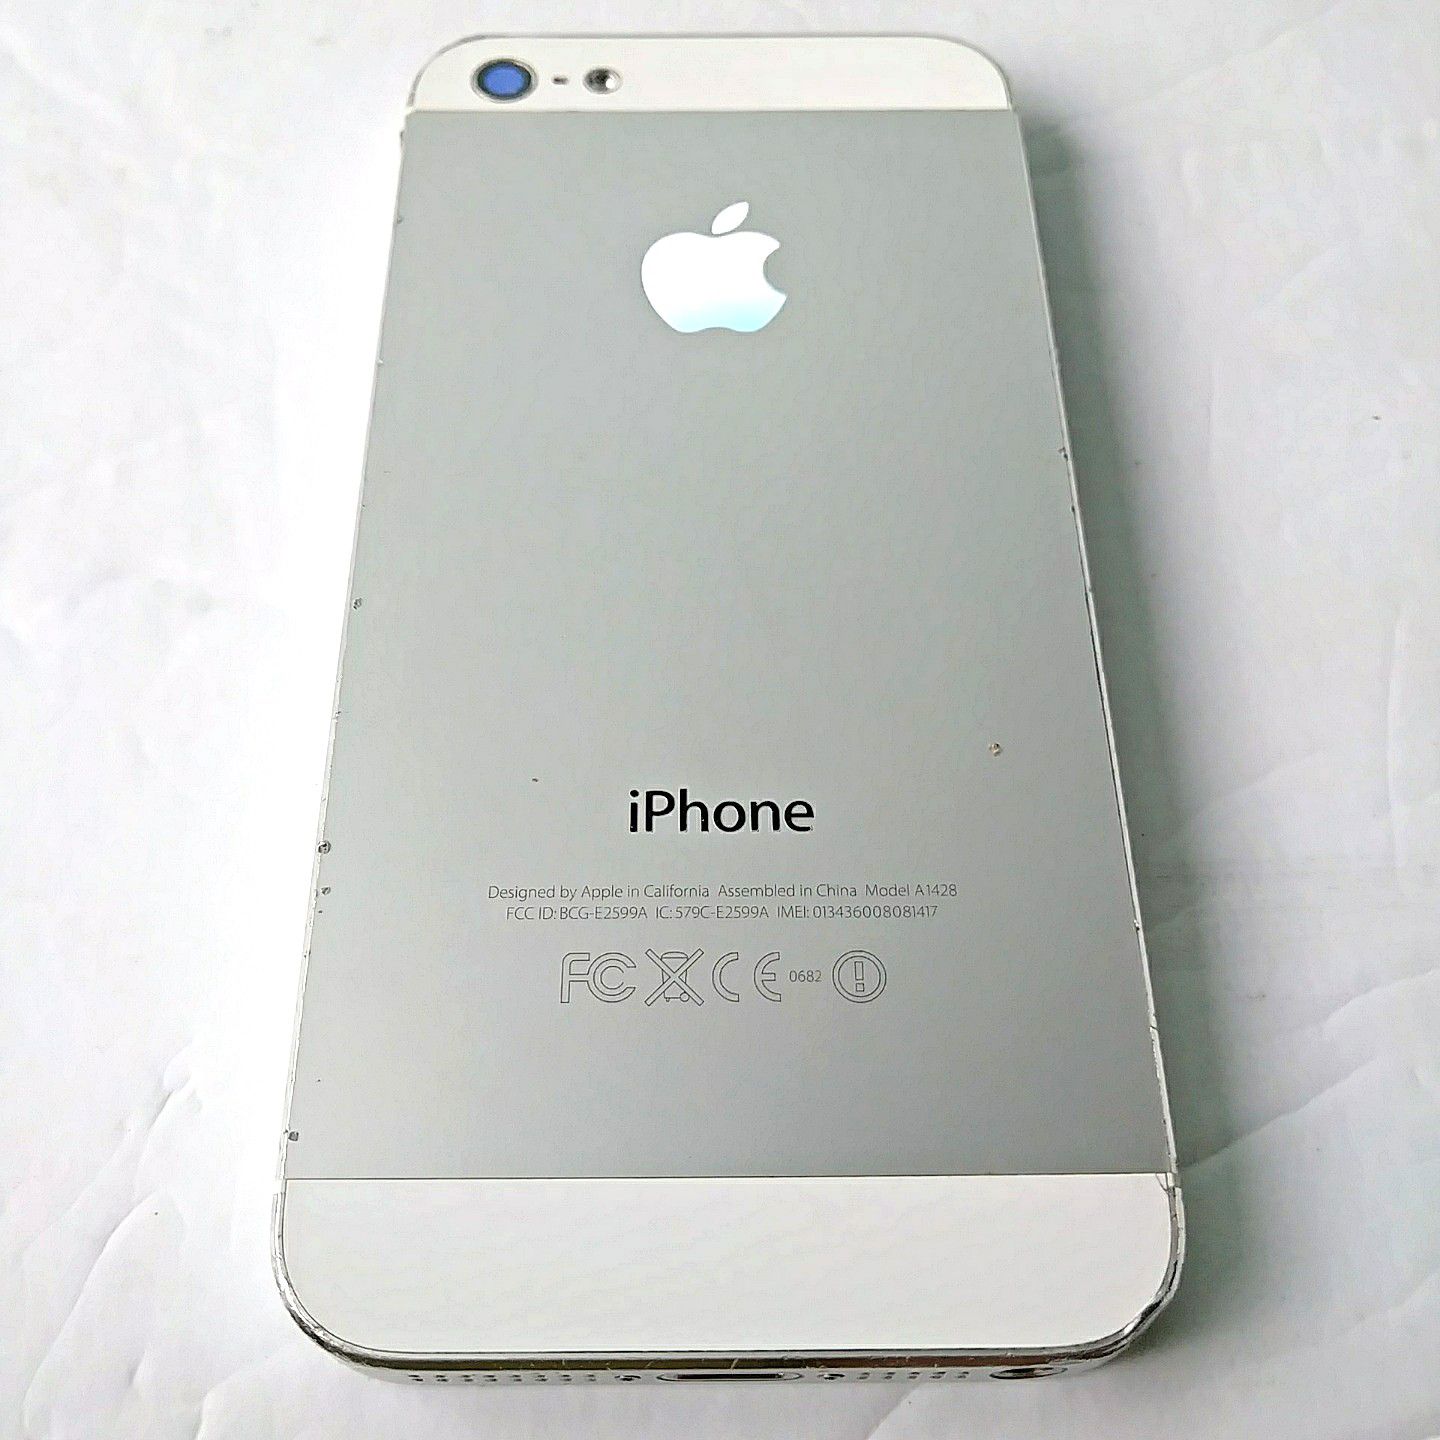 Apple iPhone 5 (64 GB) White/Silver GSM UNLOCKED NO LOCKS